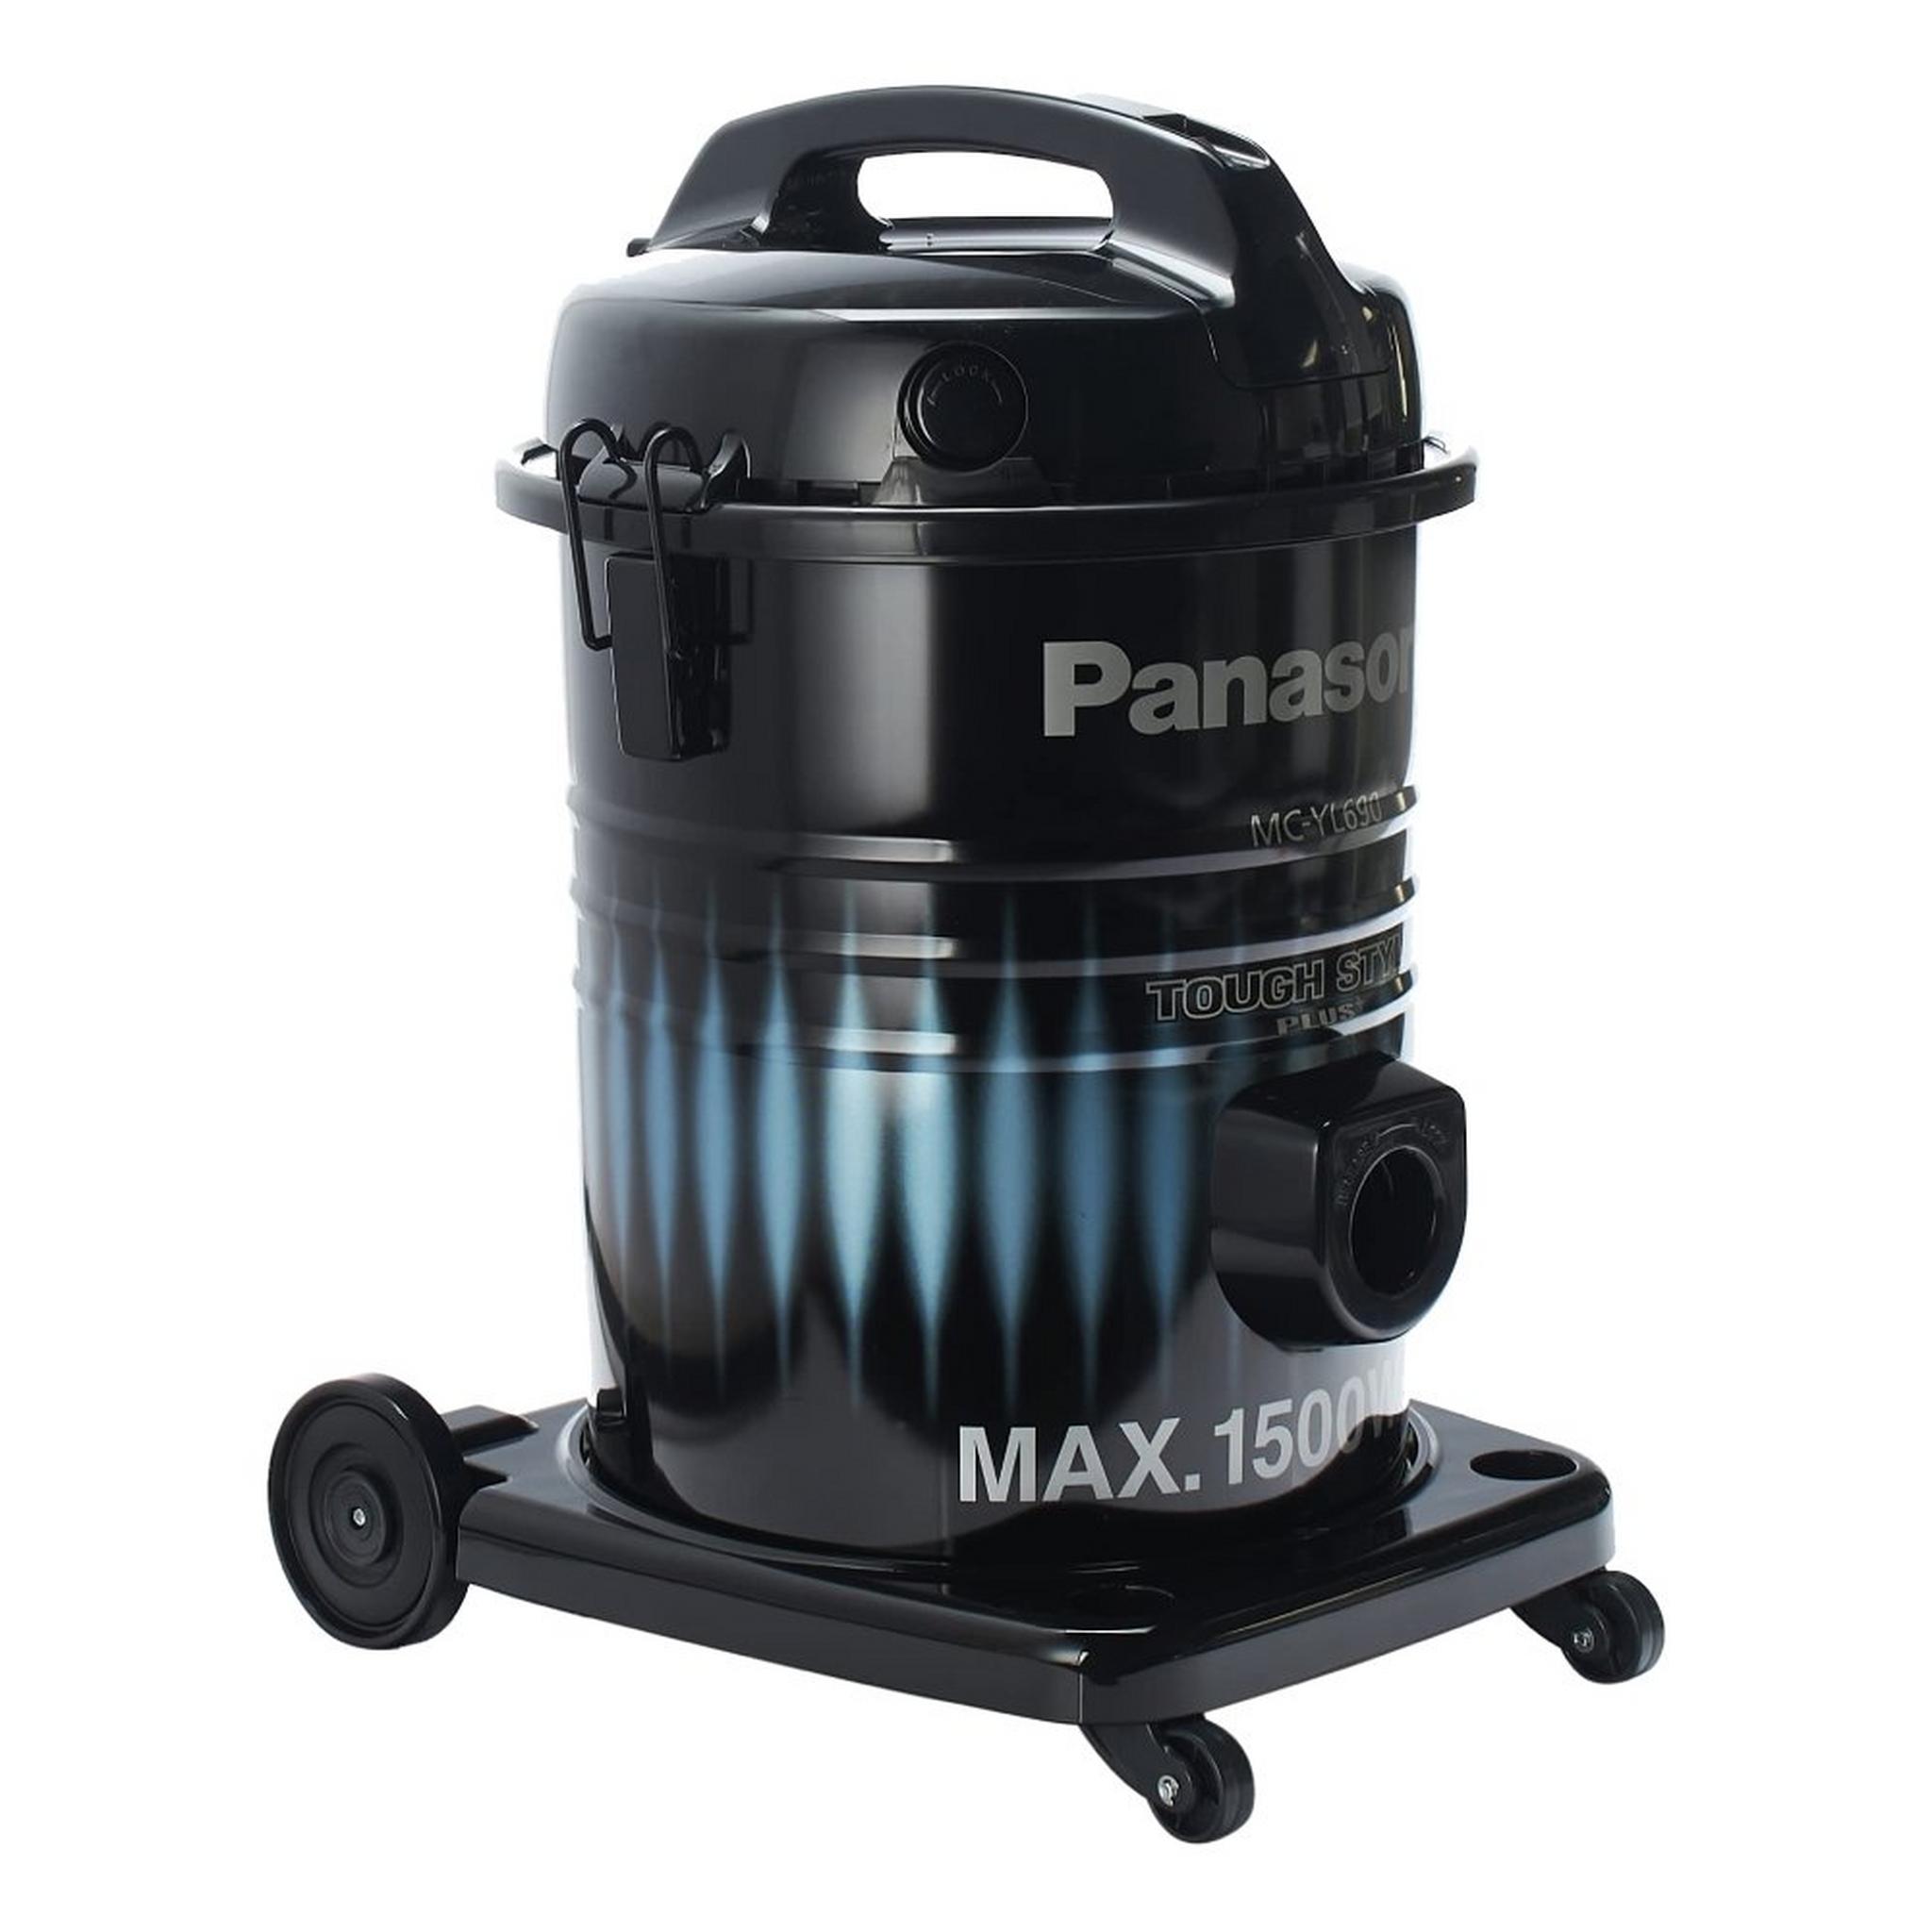 Panasonic Drum Vacuum Cleaner 1500 W, 15 Liter, MC-YL690A747 - Black